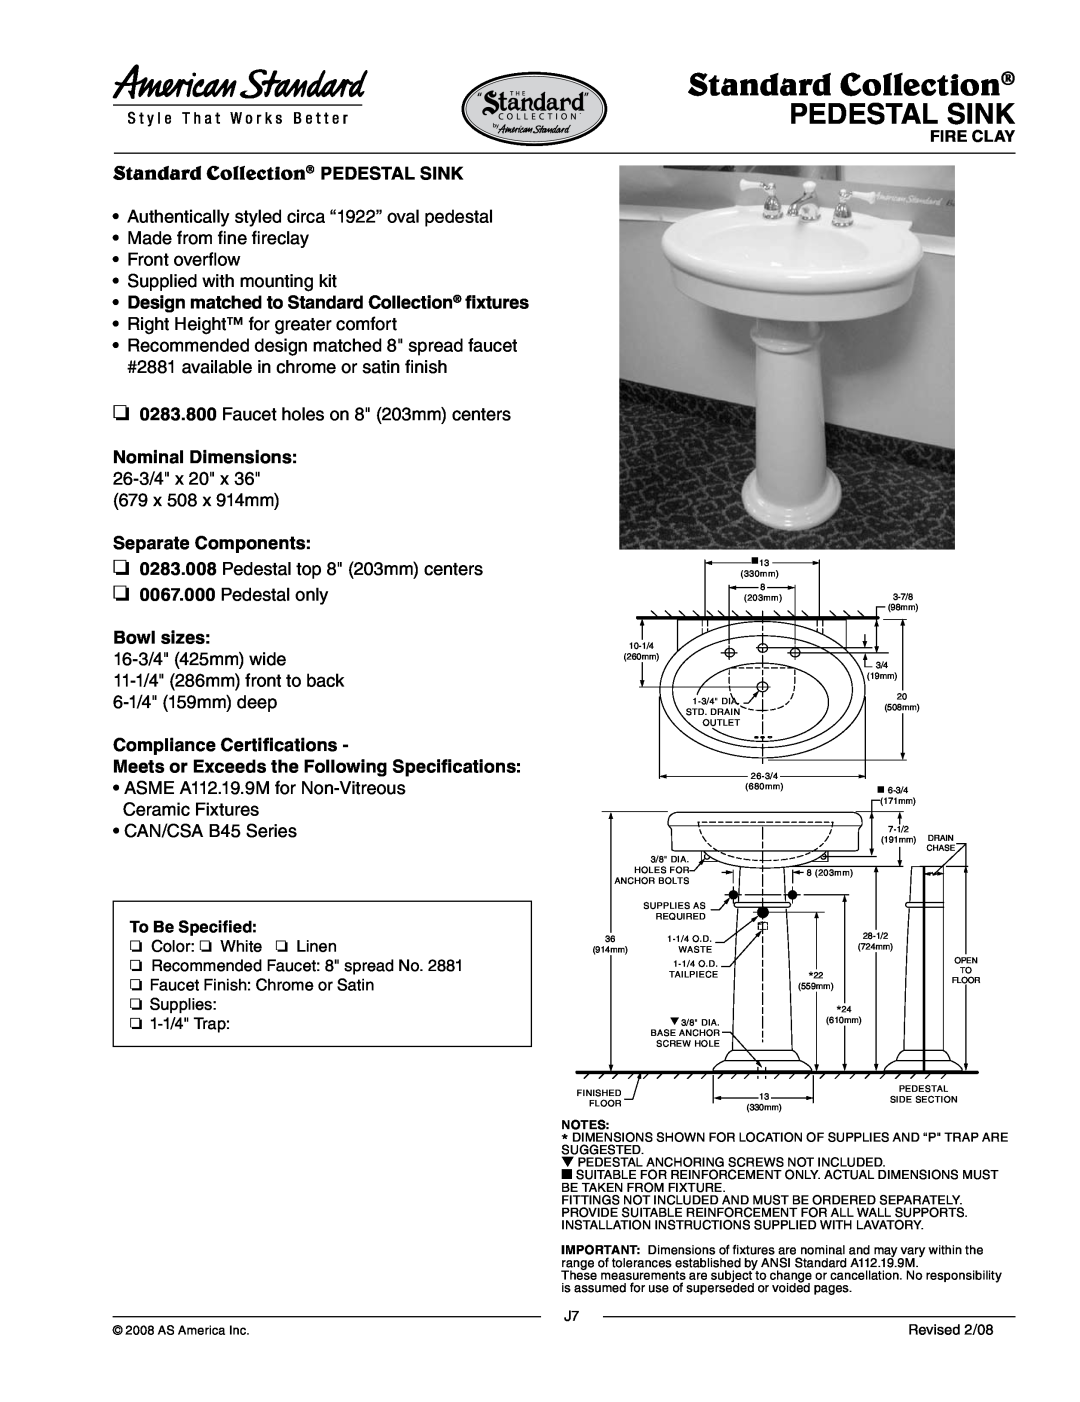 American Standard 0283.800 dimensions Pedestal Sink, Standard Collection PEDESTAL SINK, Nominal Dimensions 26-3/4x 